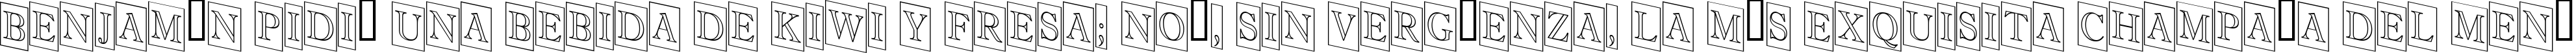 Пример написания шрифтом a_AntiqueTitulTrCmDnOtl текста на испанском